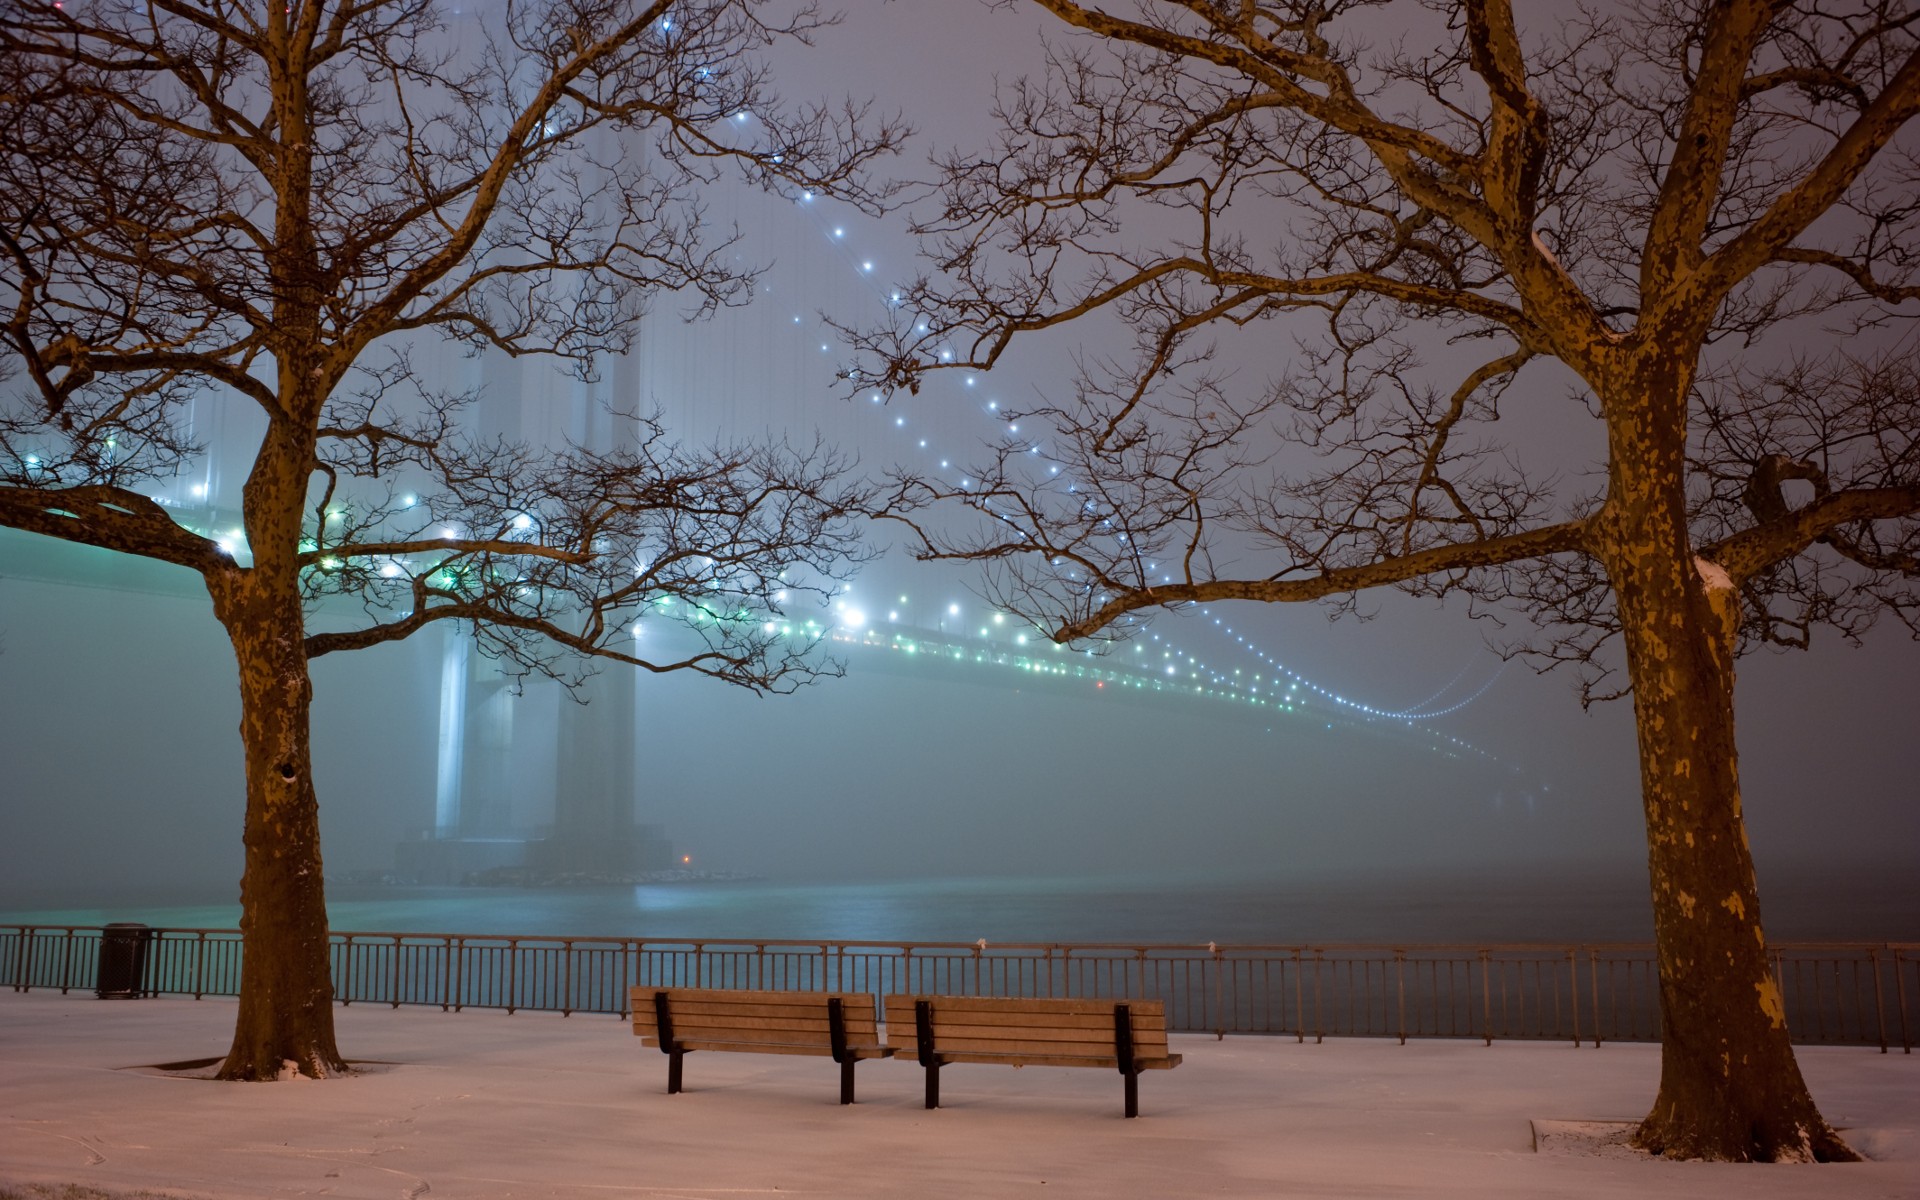 Misty Winter Night in the Park1920x1200